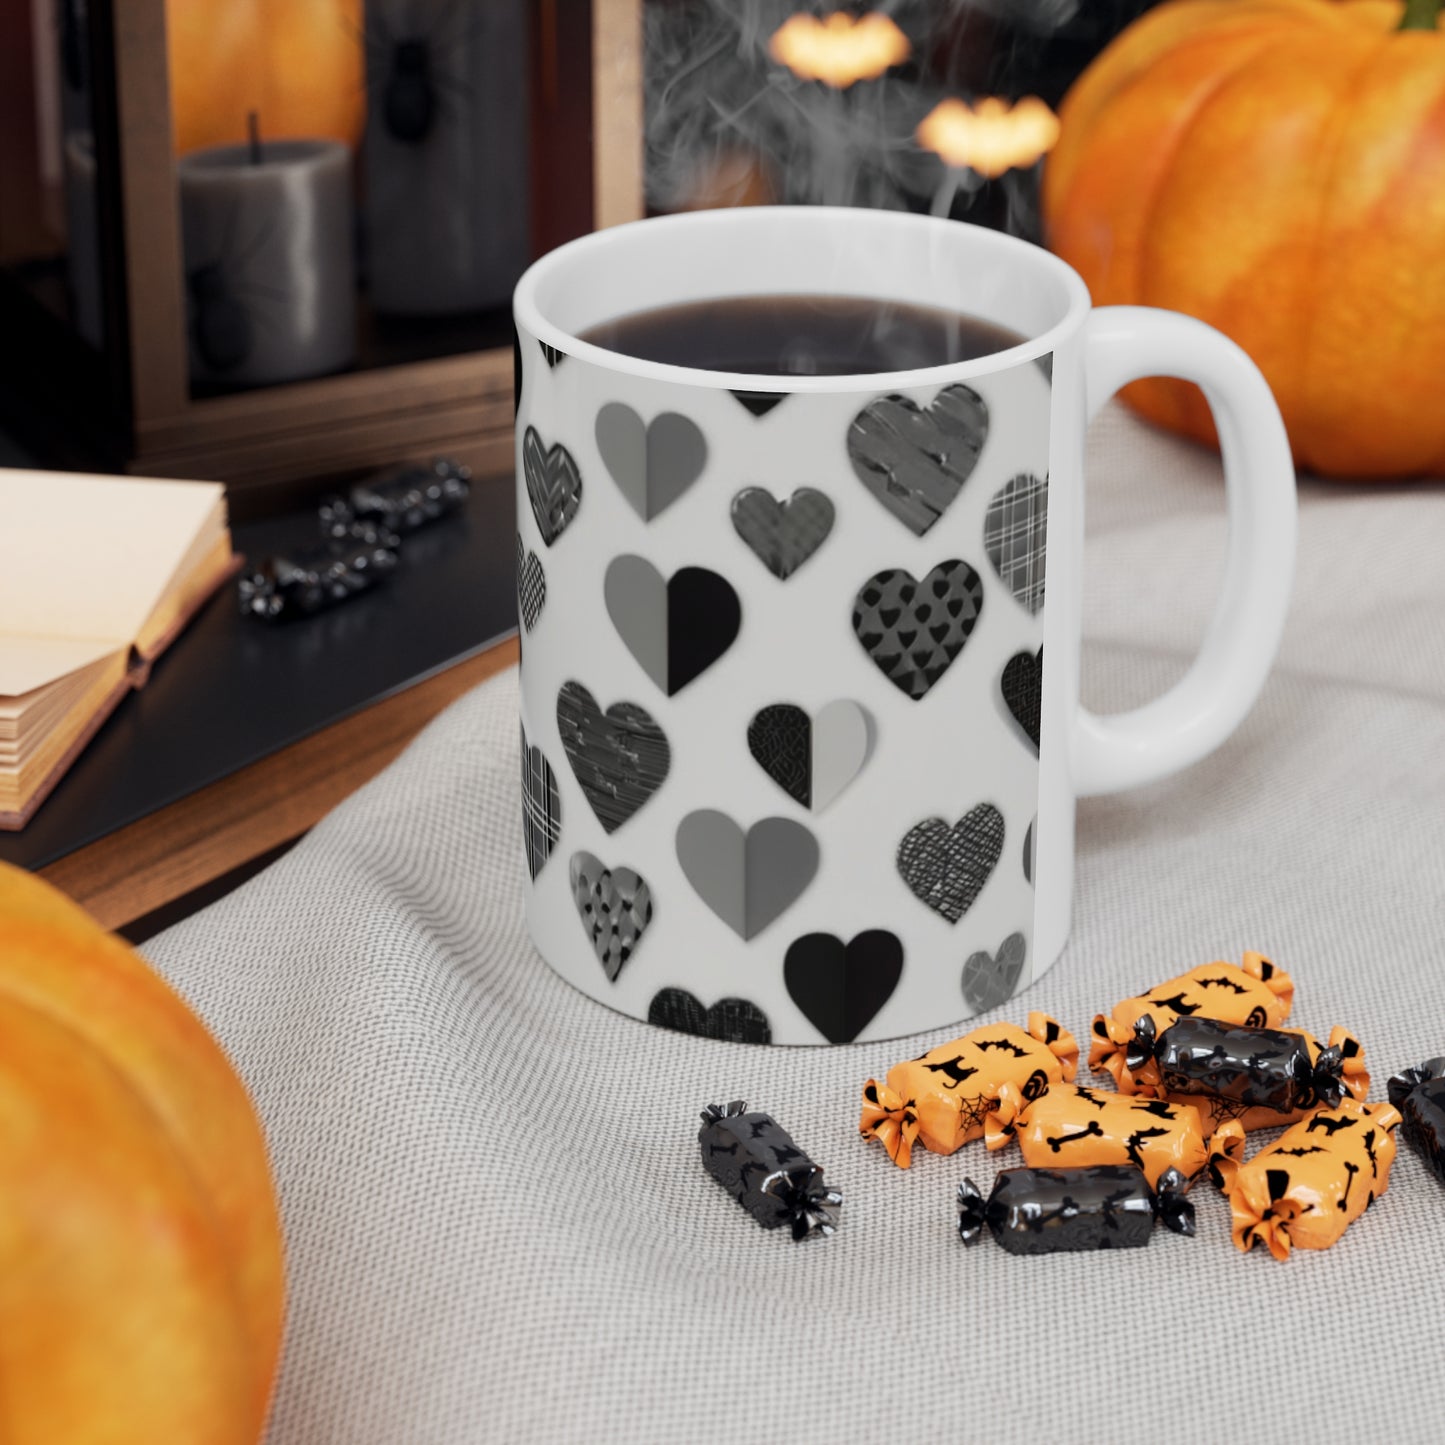 Greyscale Small Love Hearts Mug - Ceramic Coffee Mug 11oz